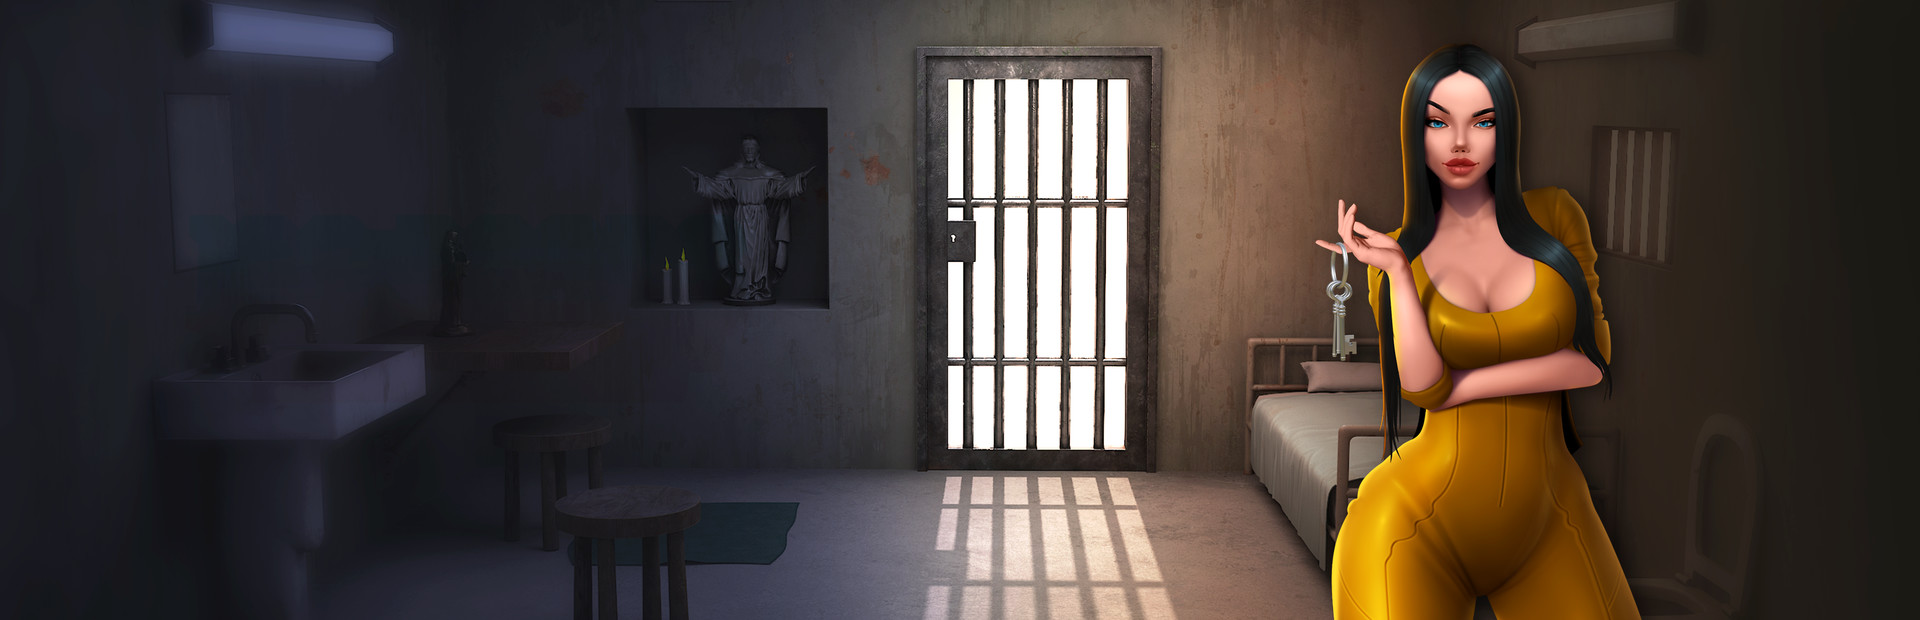 100 Doors - Escape from Prison Thread - ModDB